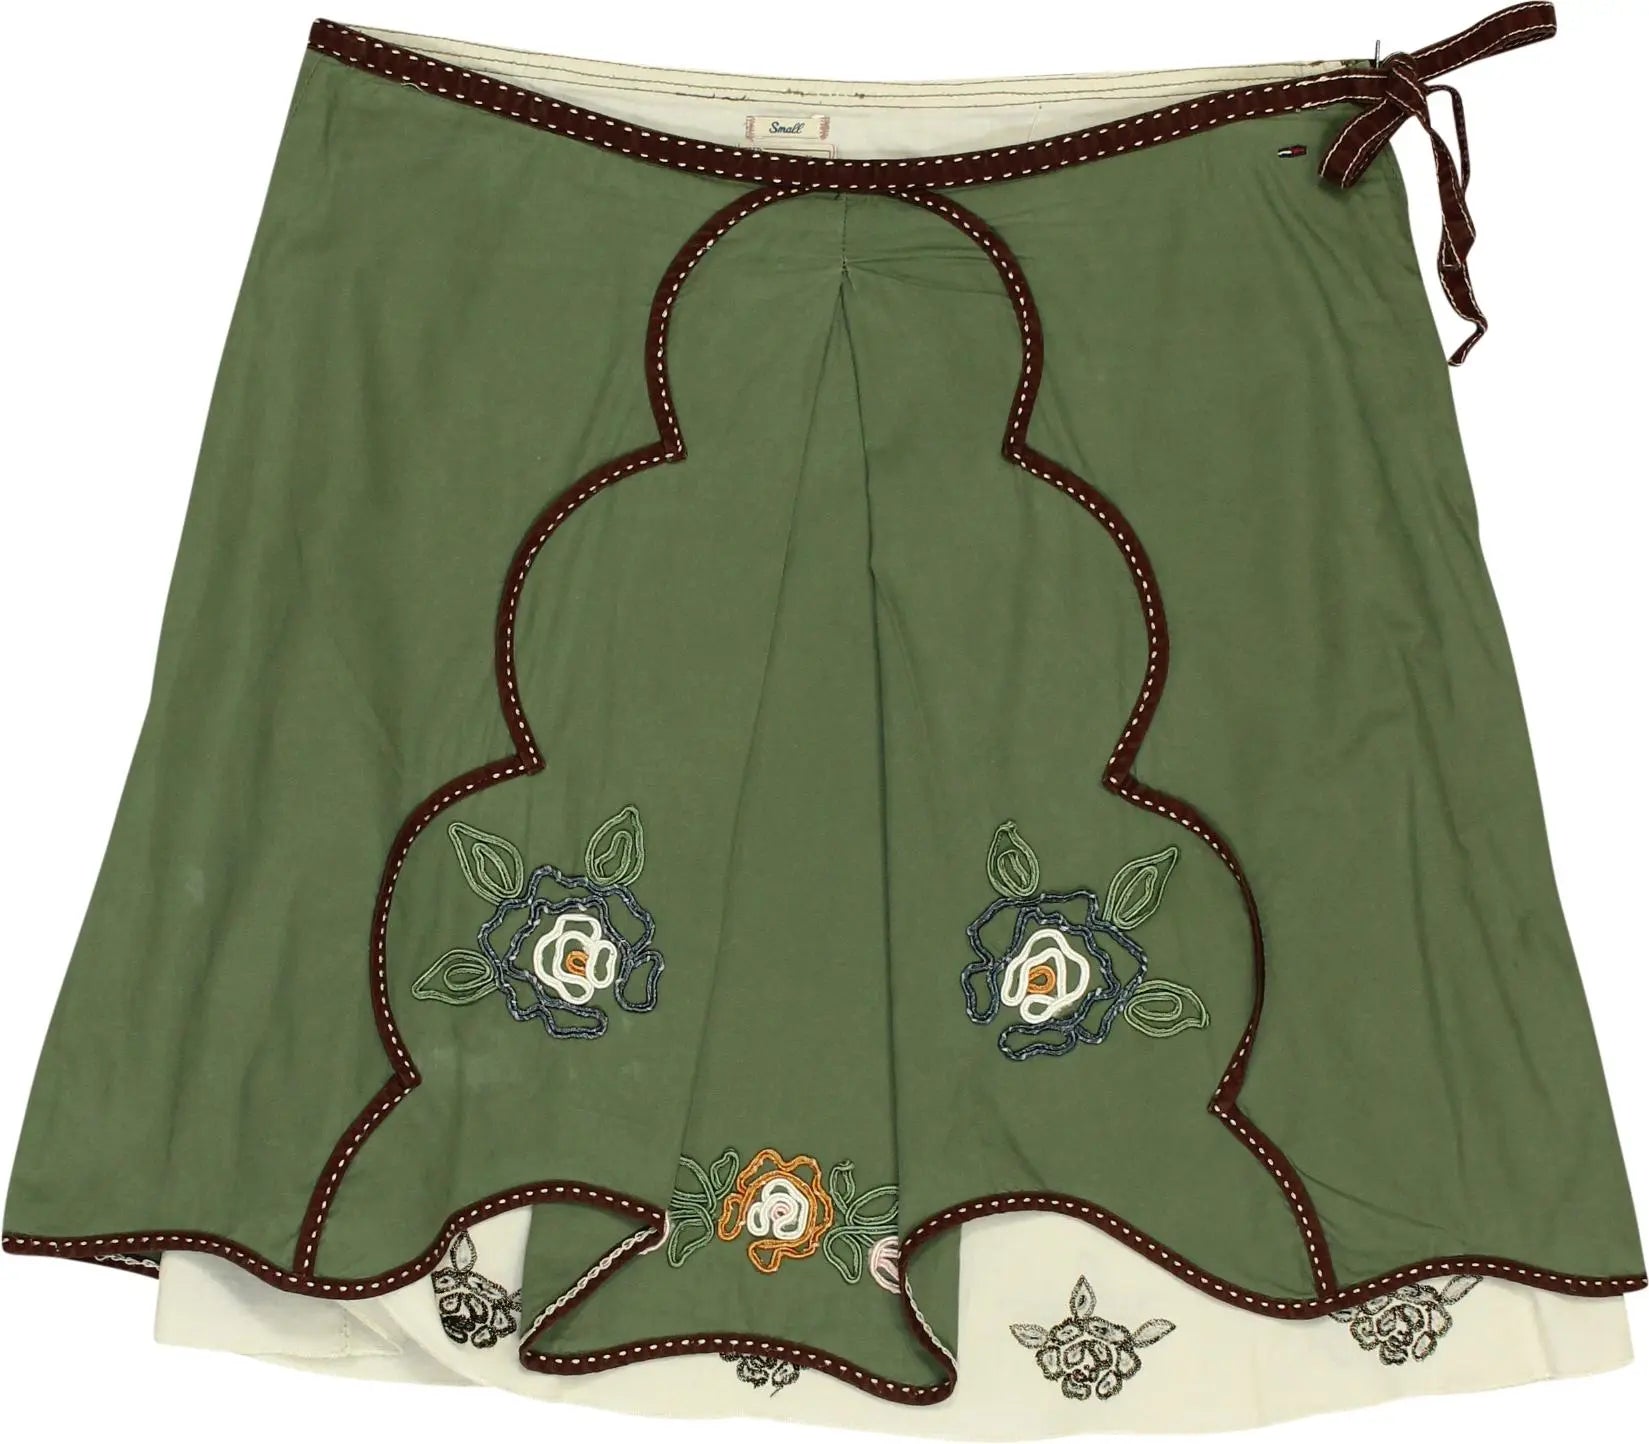 Tommy Hilfiger - Vintage A-line Skirt- ThriftTale.com - Vintage and second handclothing